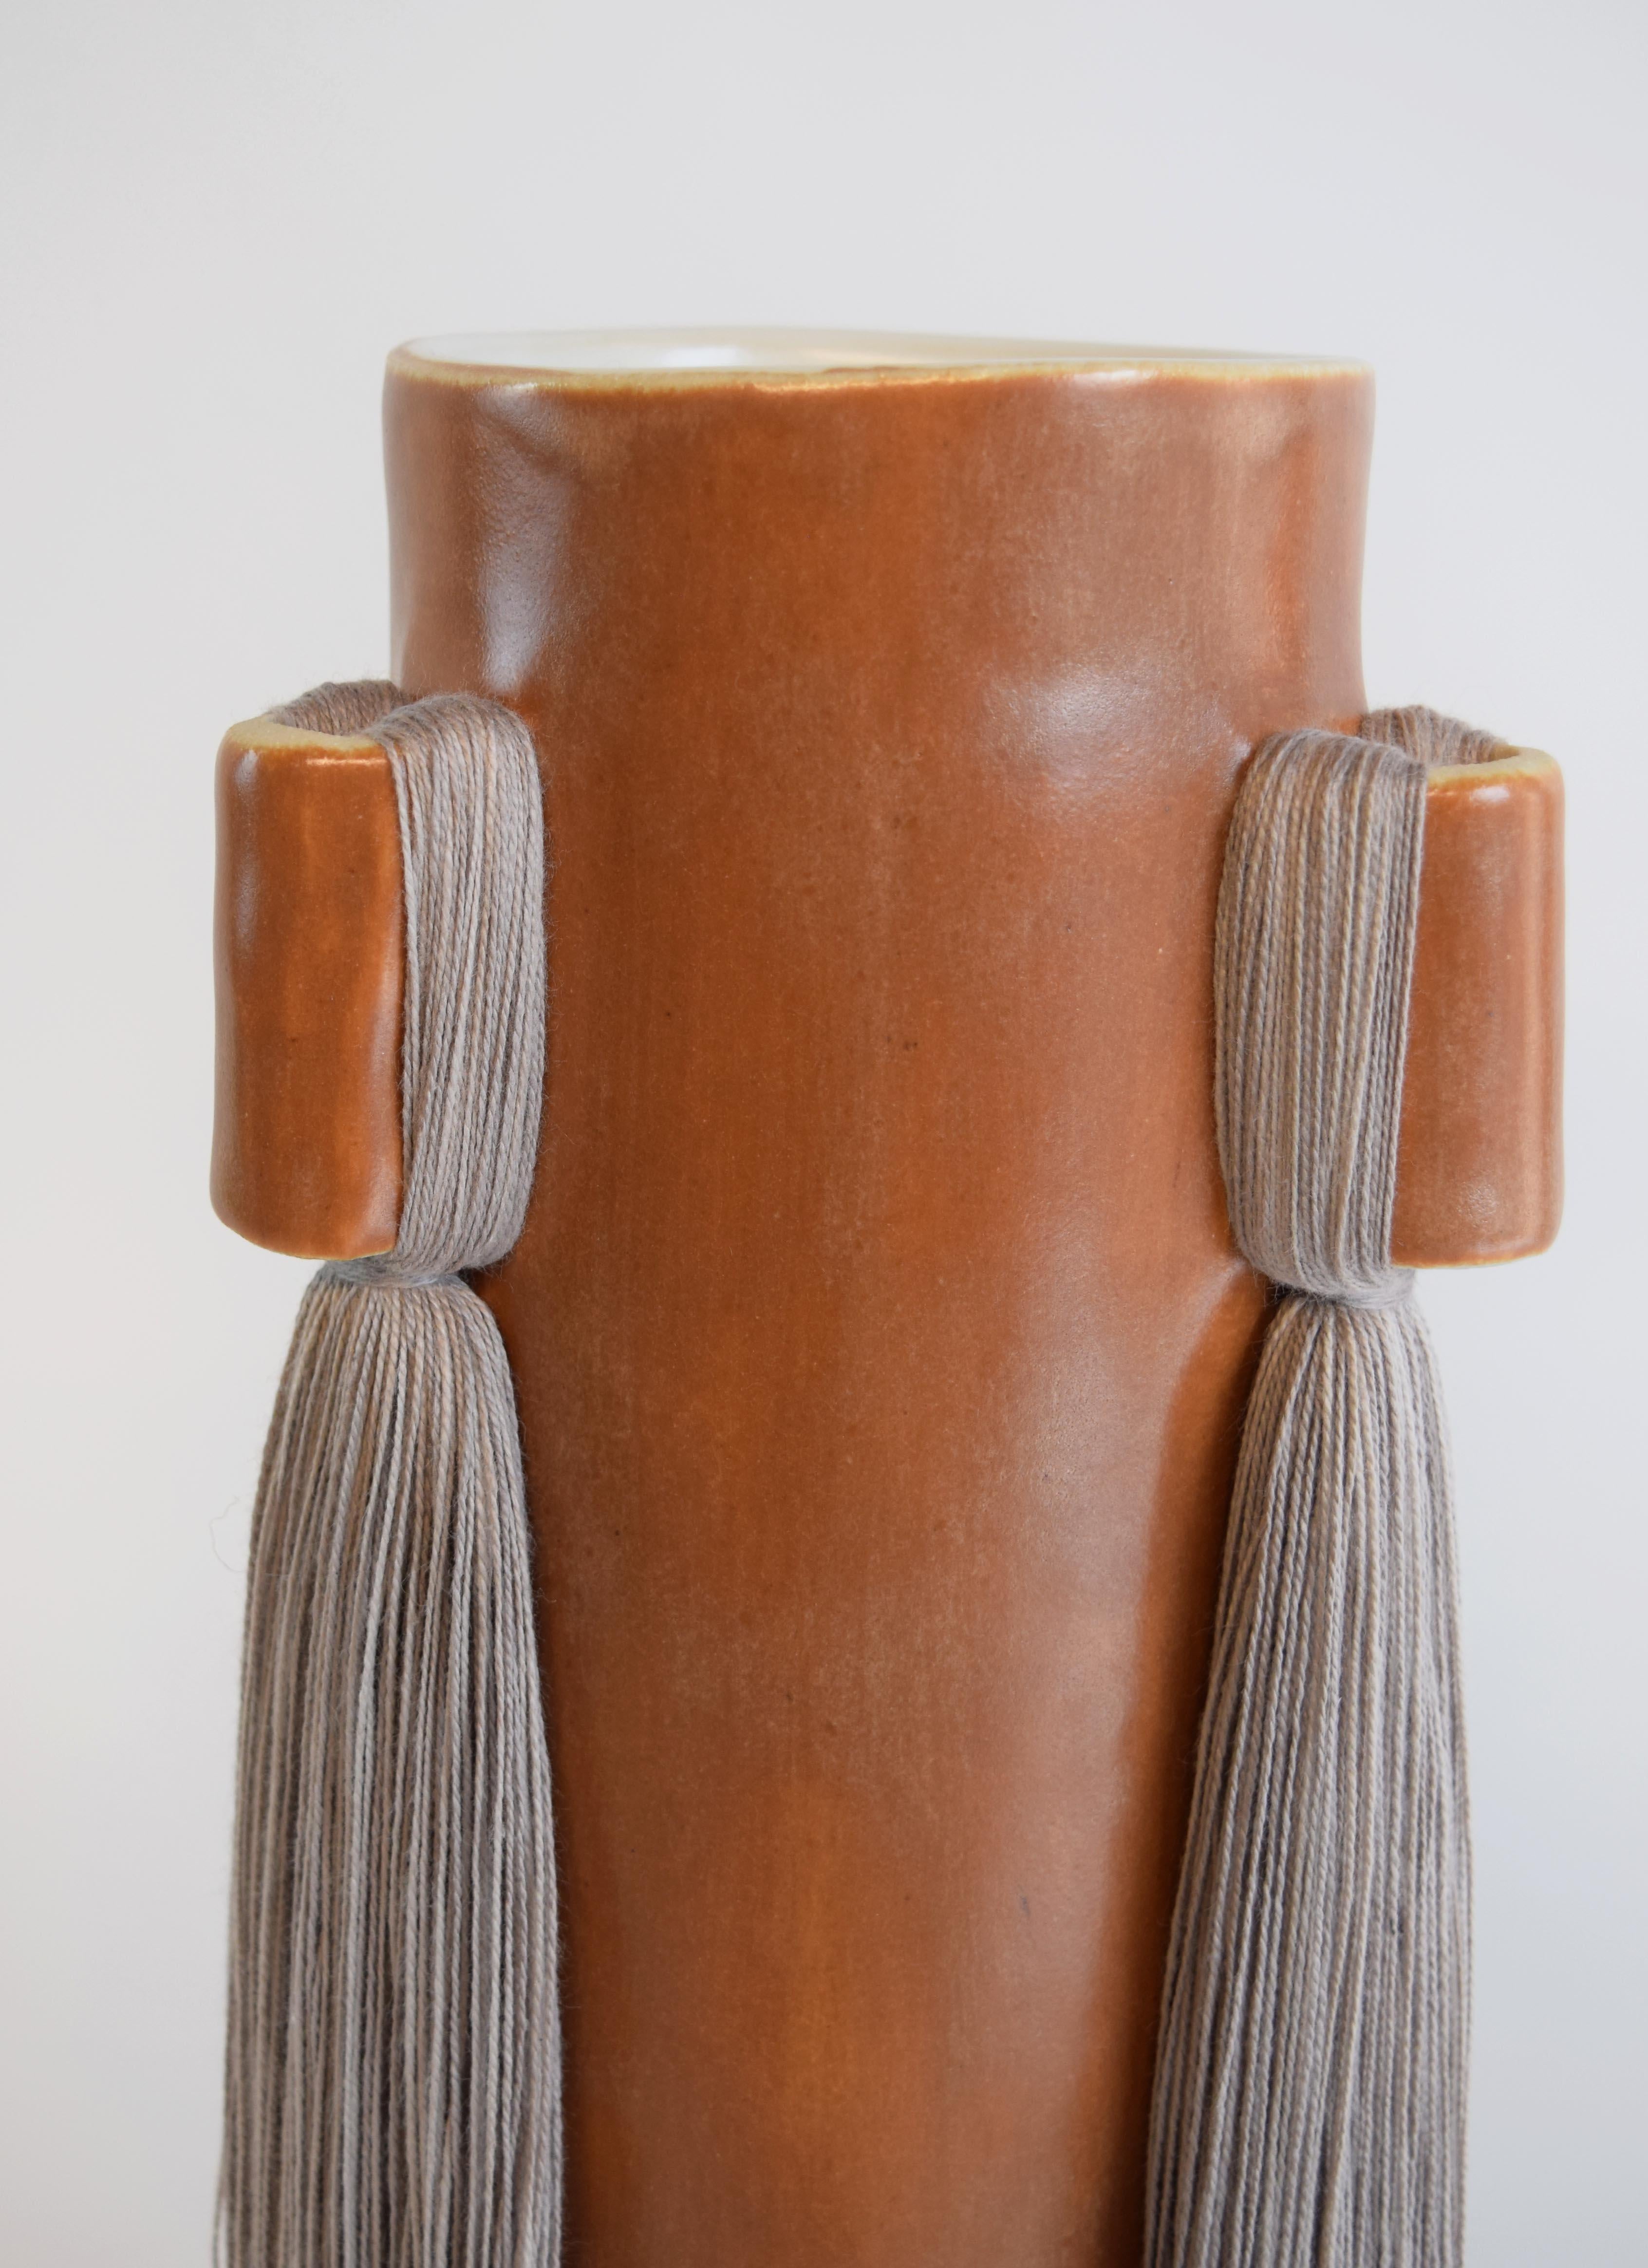 American Handmade Ceramic Vase #607 in Satin Brown Glaze with Gray Cotton Fringe Detail For Sale